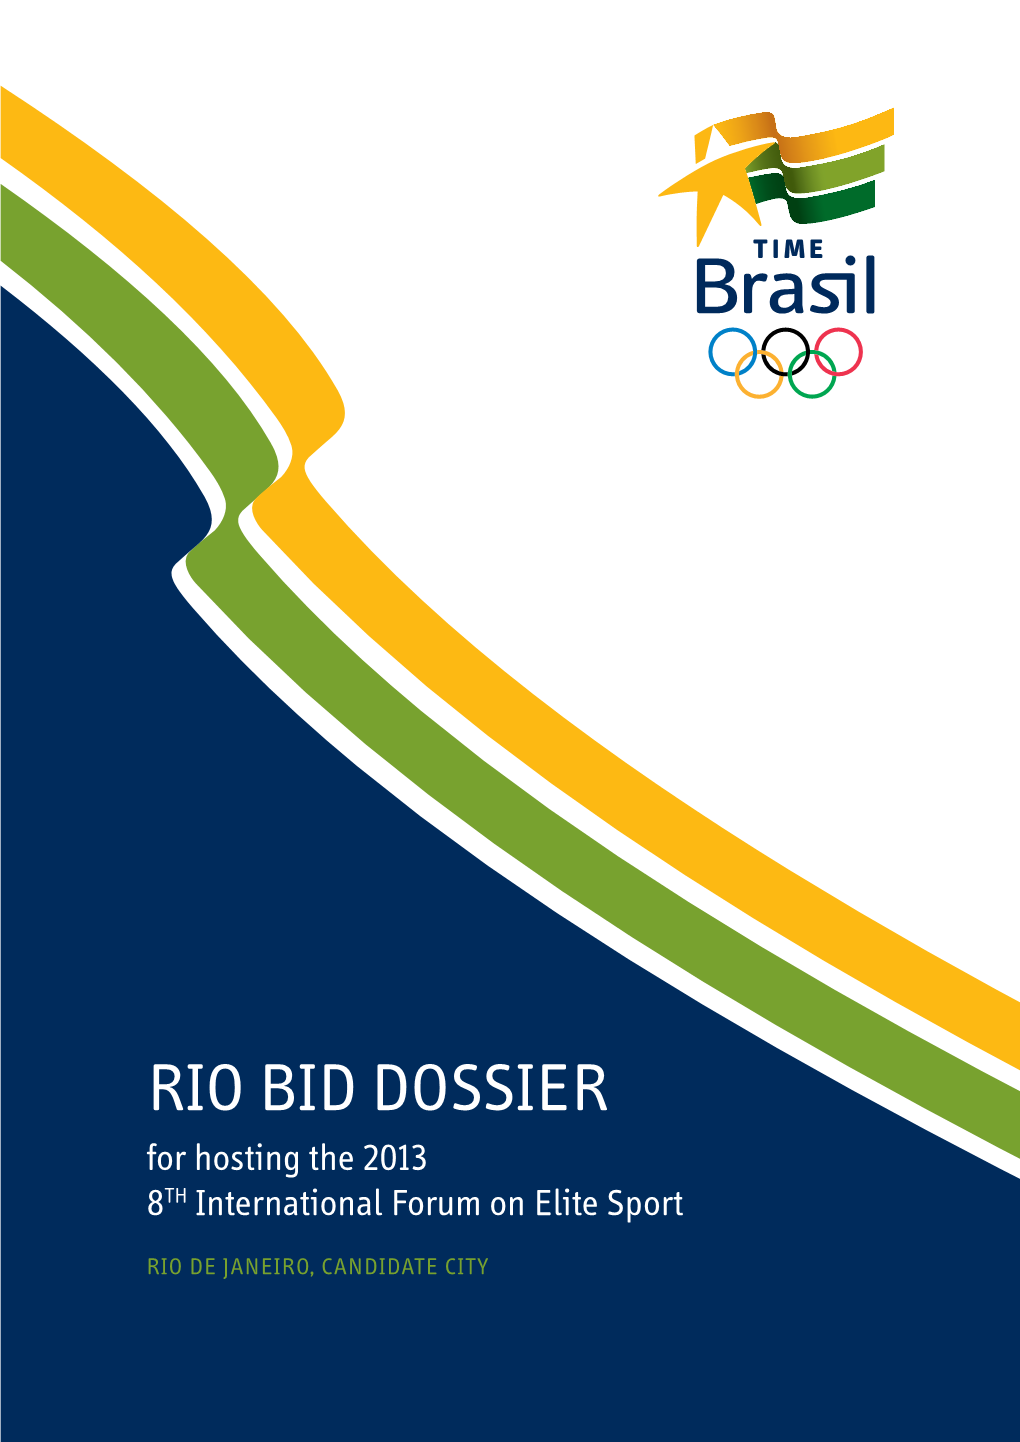 RIO BID DOSSIER for Hosting the 2013 8TH International Forum on Elite Sport